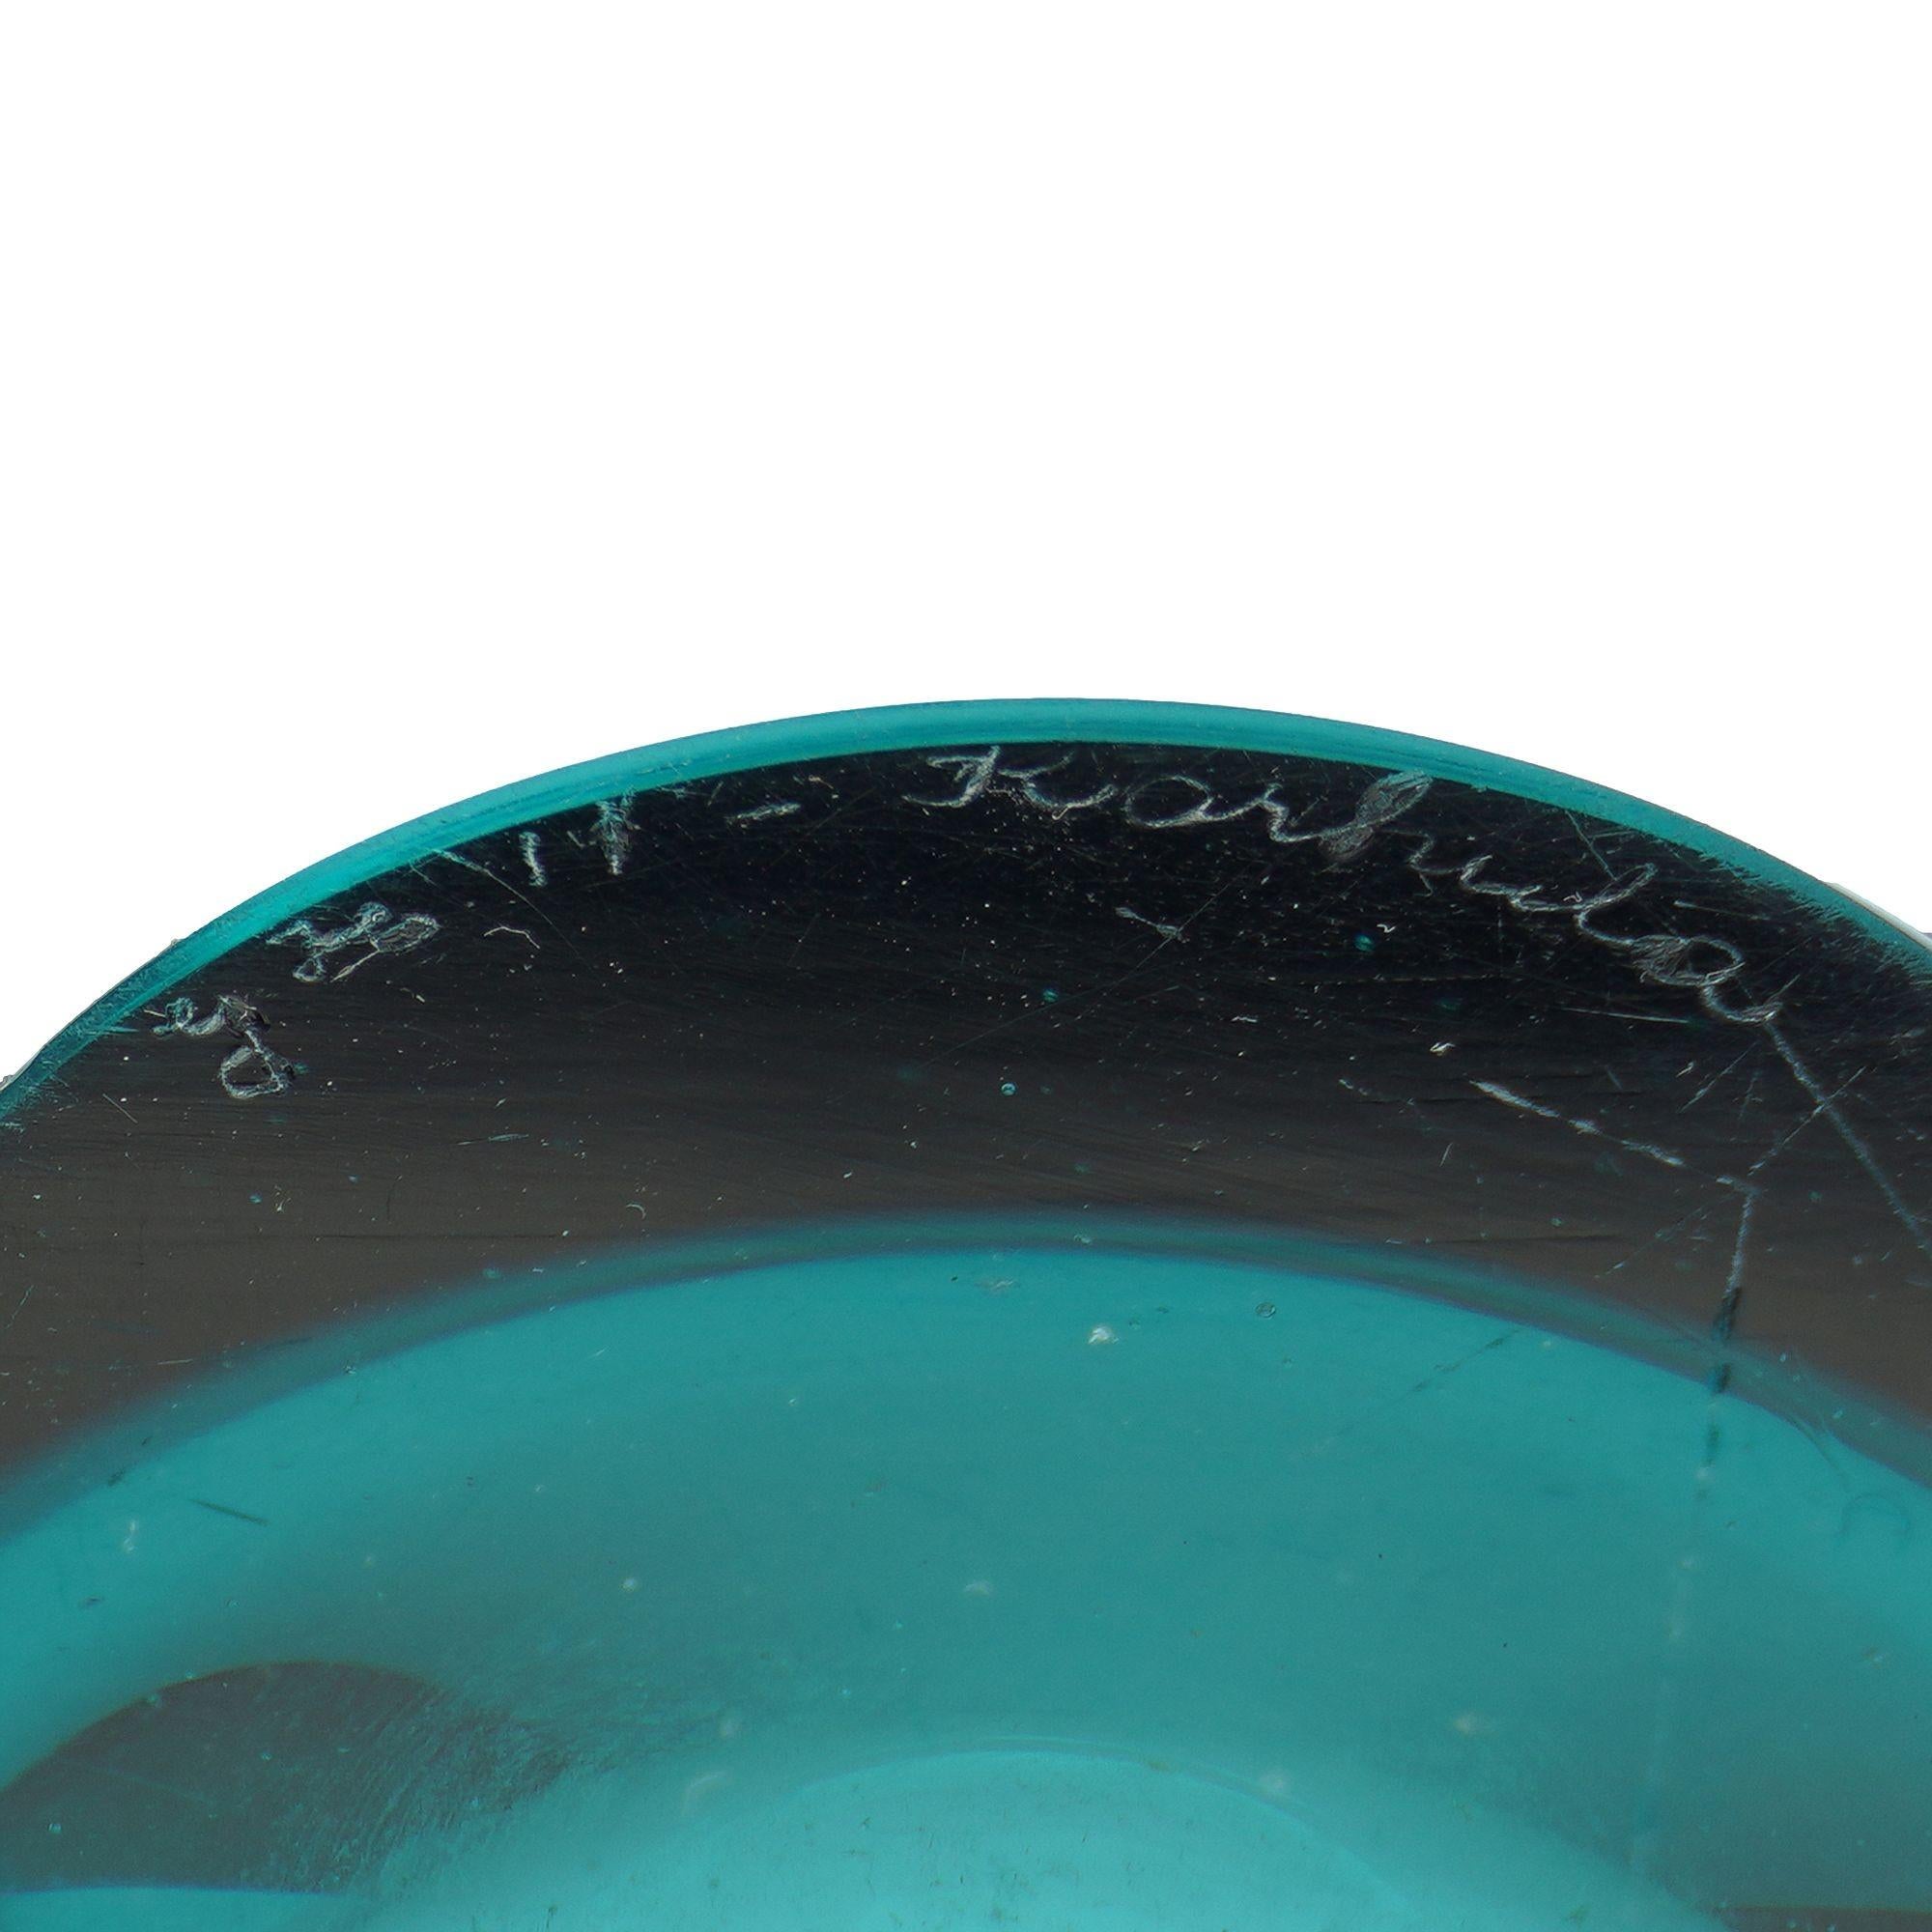 Blaugrüne Vase aus mundgeblasenem Karhula-Kunstglas, 1940er-Jahre (Glas) im Angebot